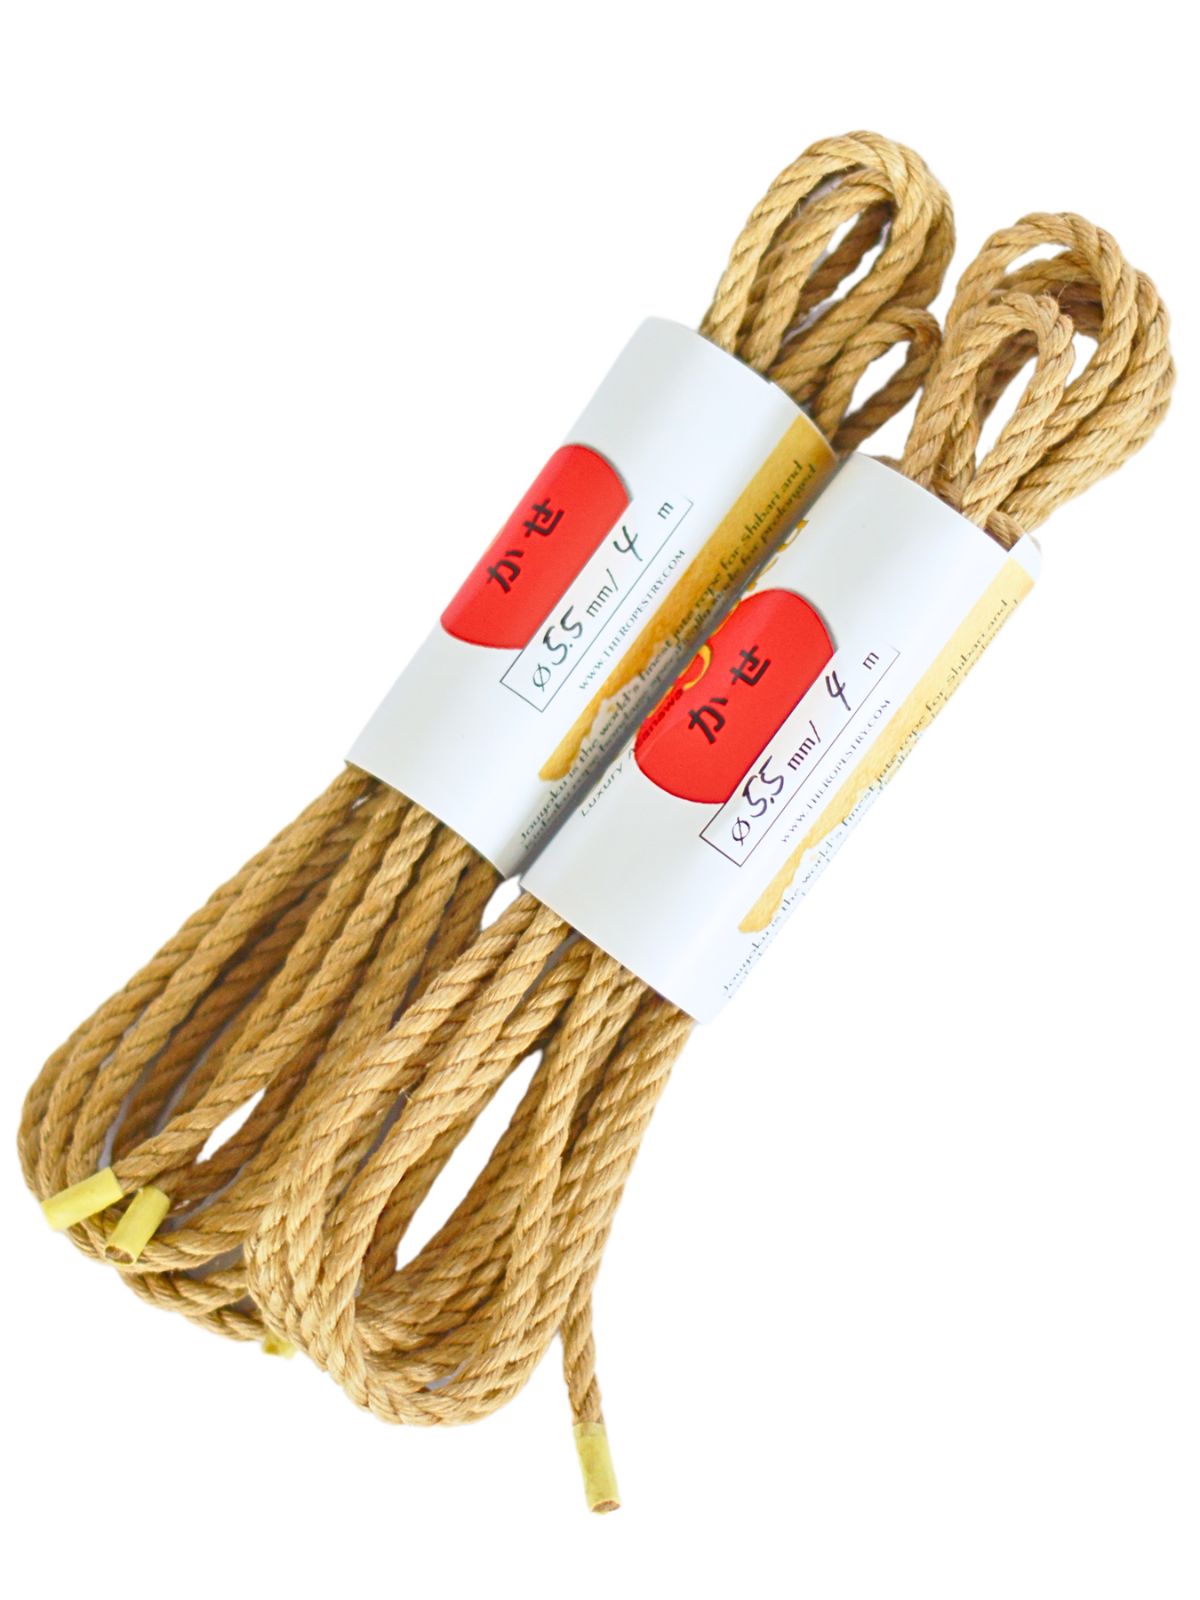 ø 5.5mm JOUYOKU ready-to-use jute rope for Shibari, Kinbaku bondage, various lengths and sets